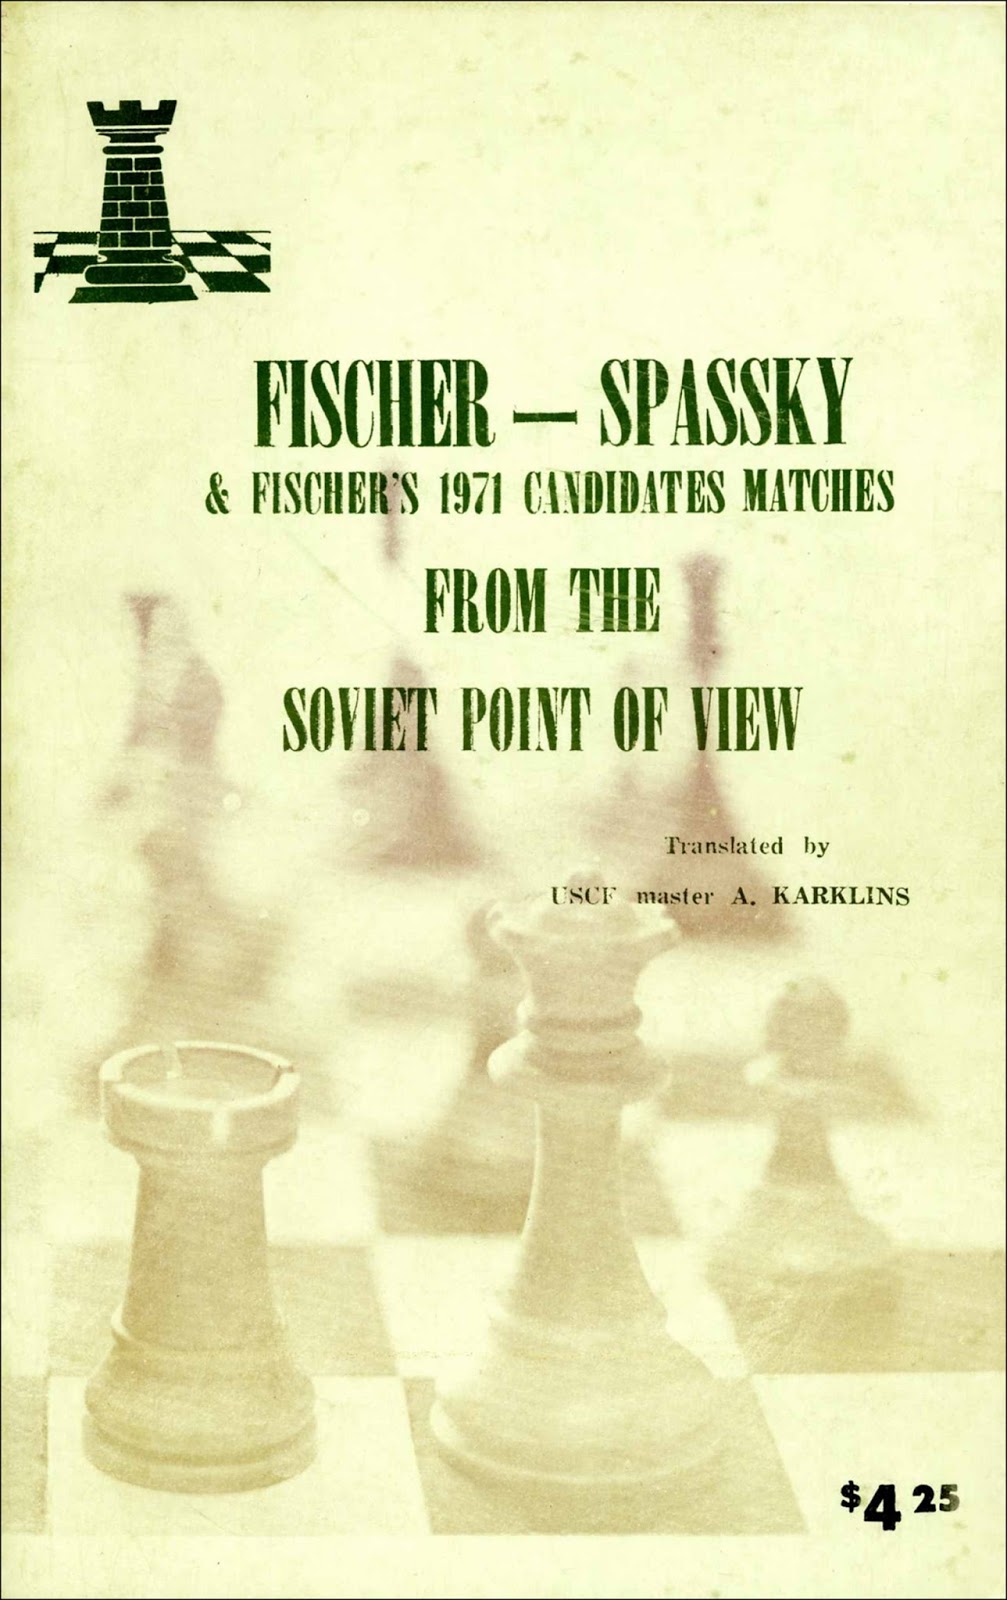 1972 Bobby Fischer vs. Boris Spassky World Chess Championship Used, Lot  #53382